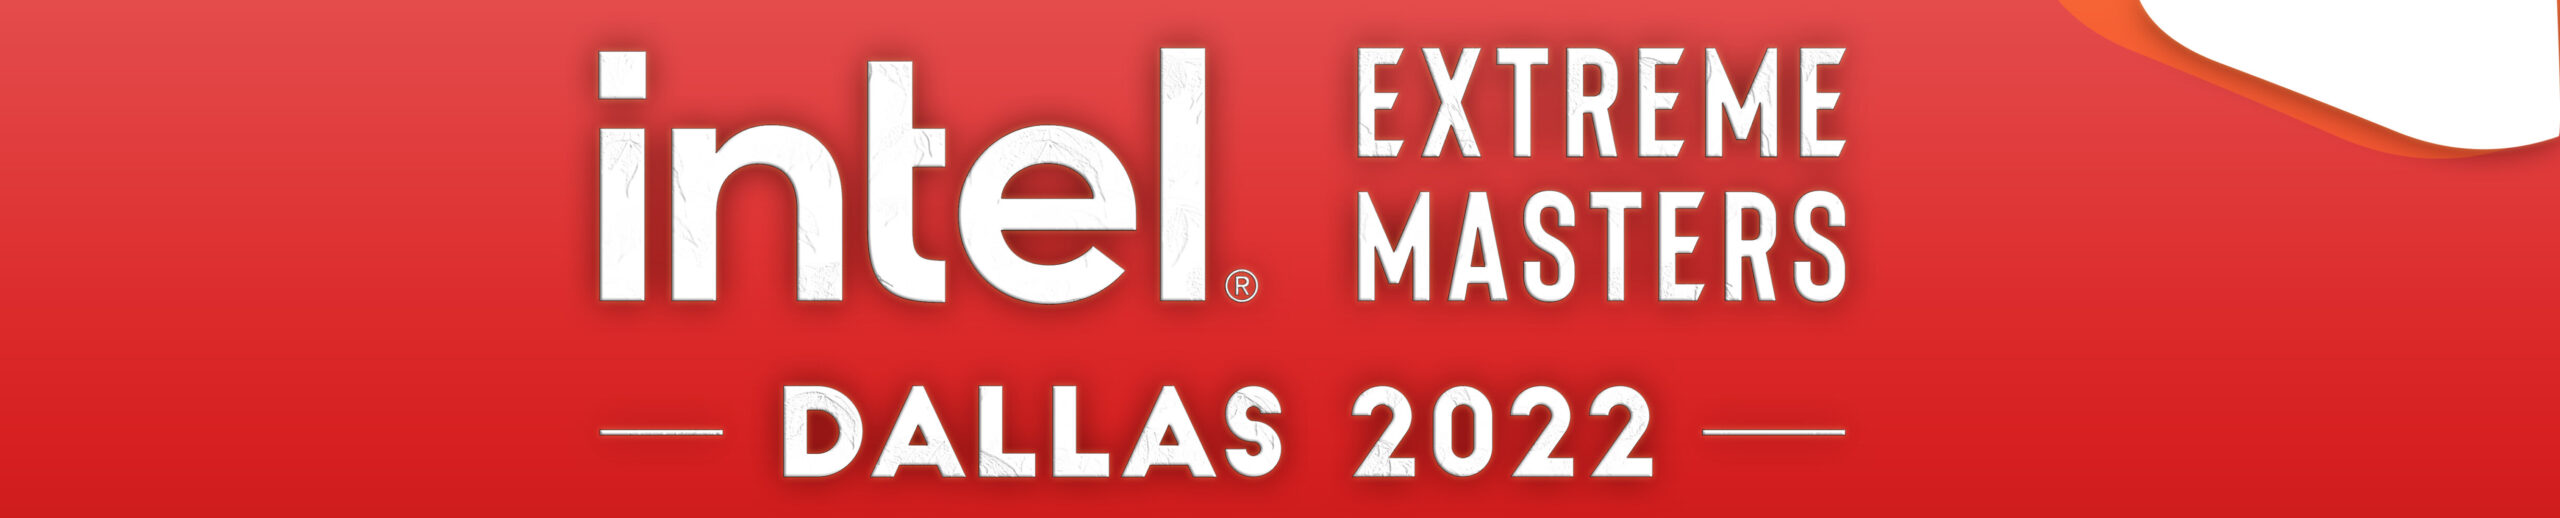 Intel Extreme Masters Dallas 2022 1